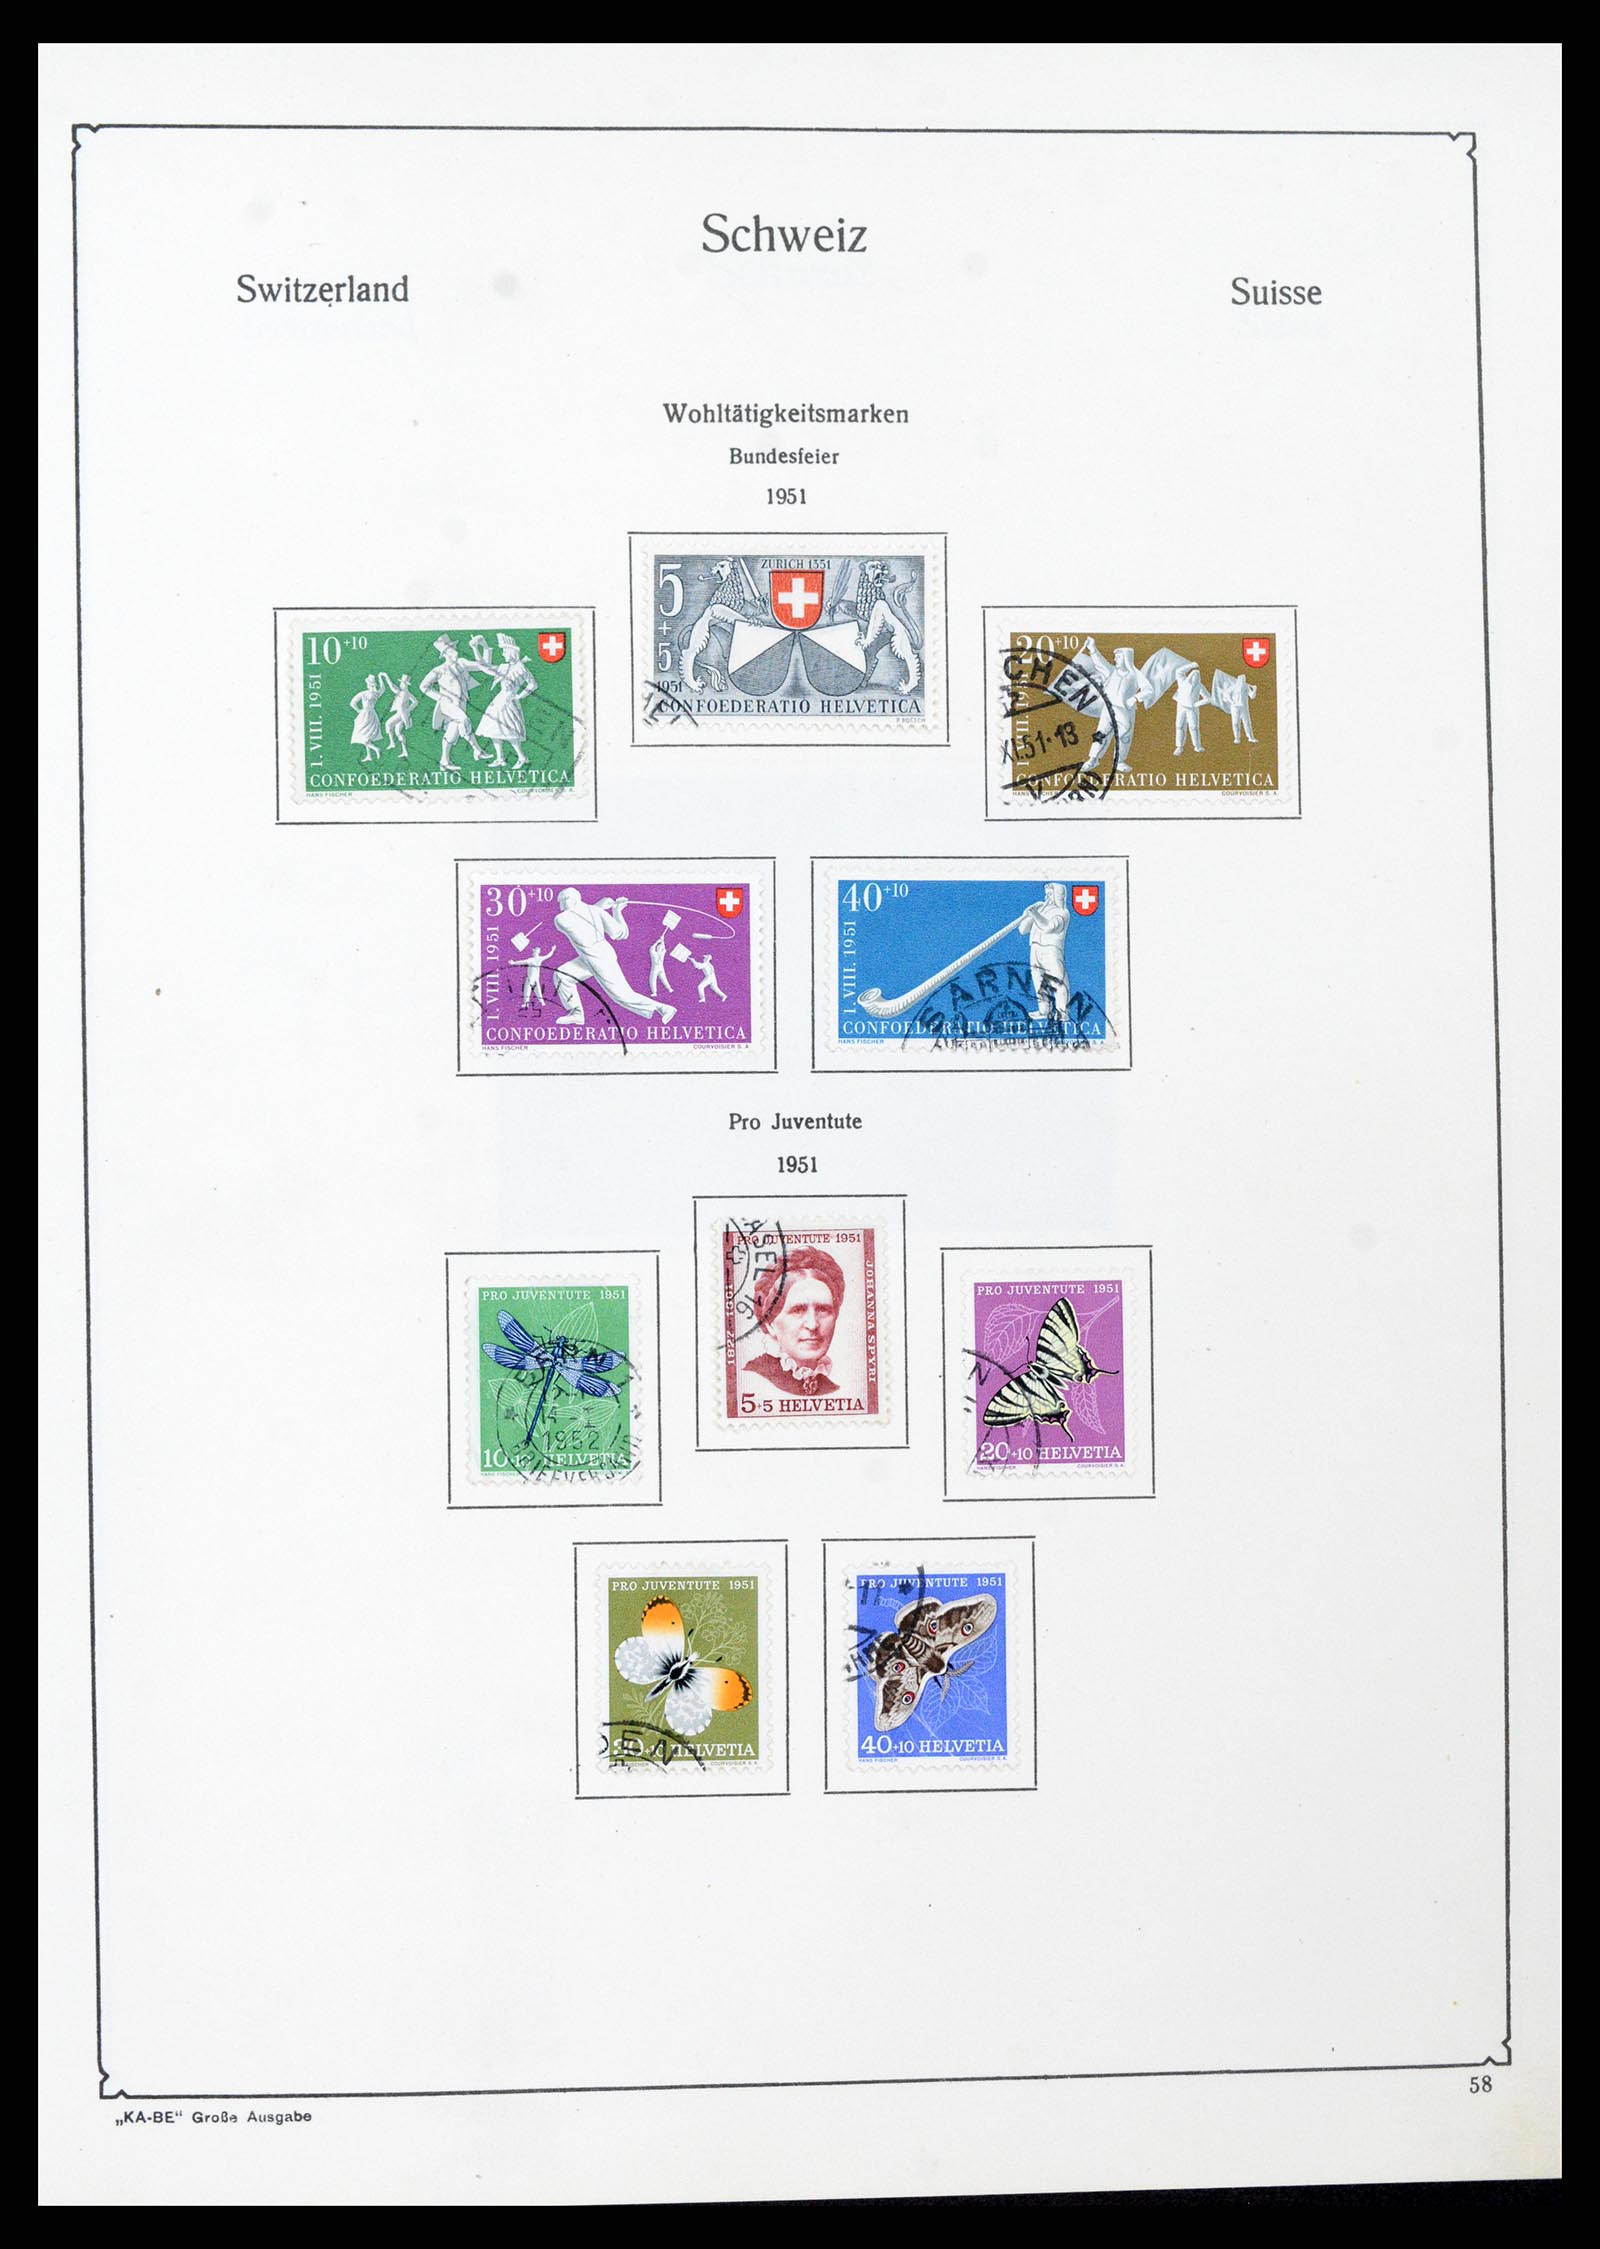 37588 055 - Stamp collection 37588 Switzerland 1854-1974.